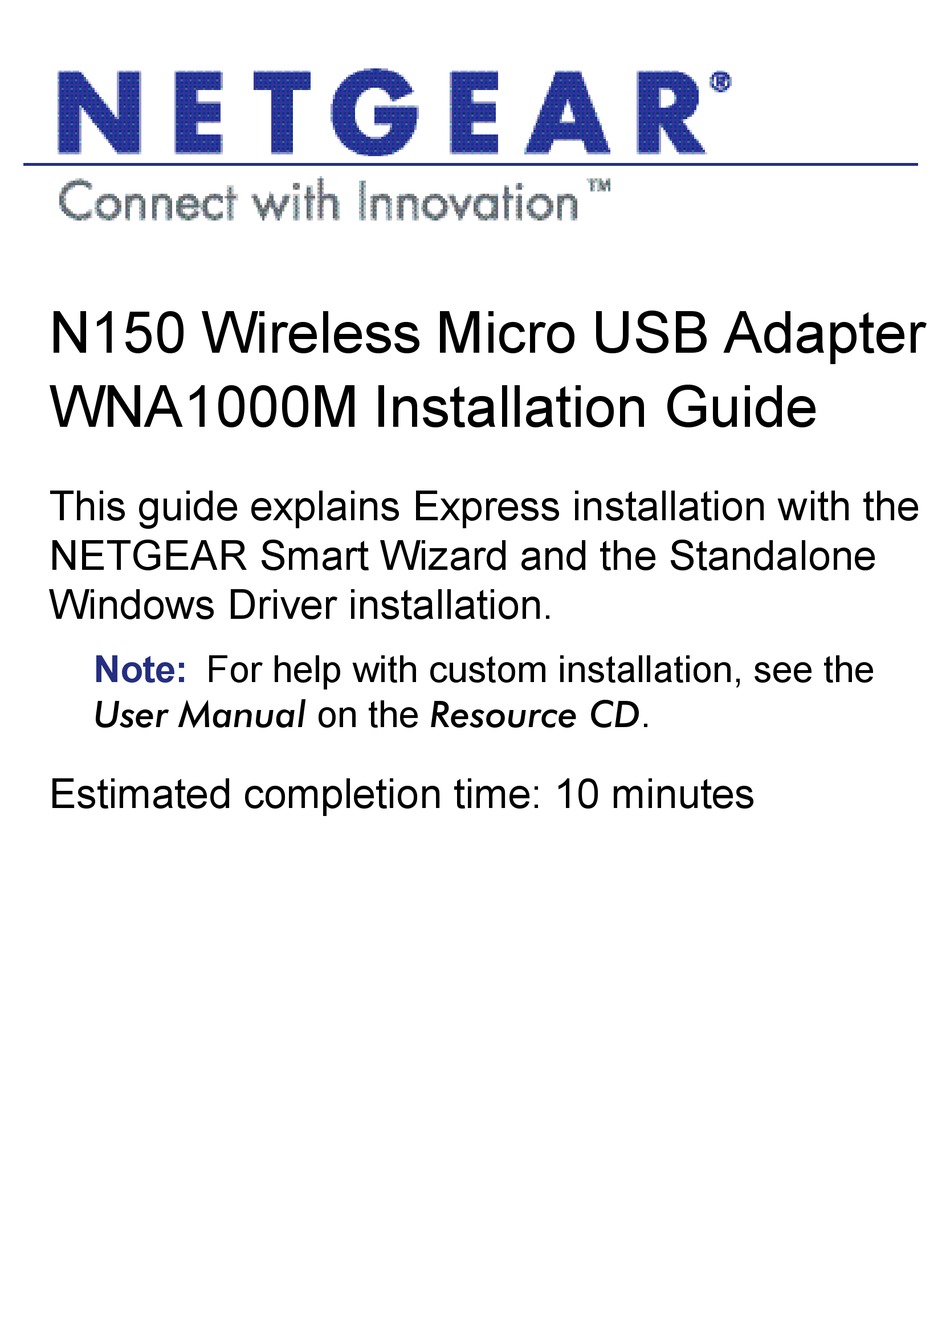 netgear n150 wireless usb adapter driver windows 7